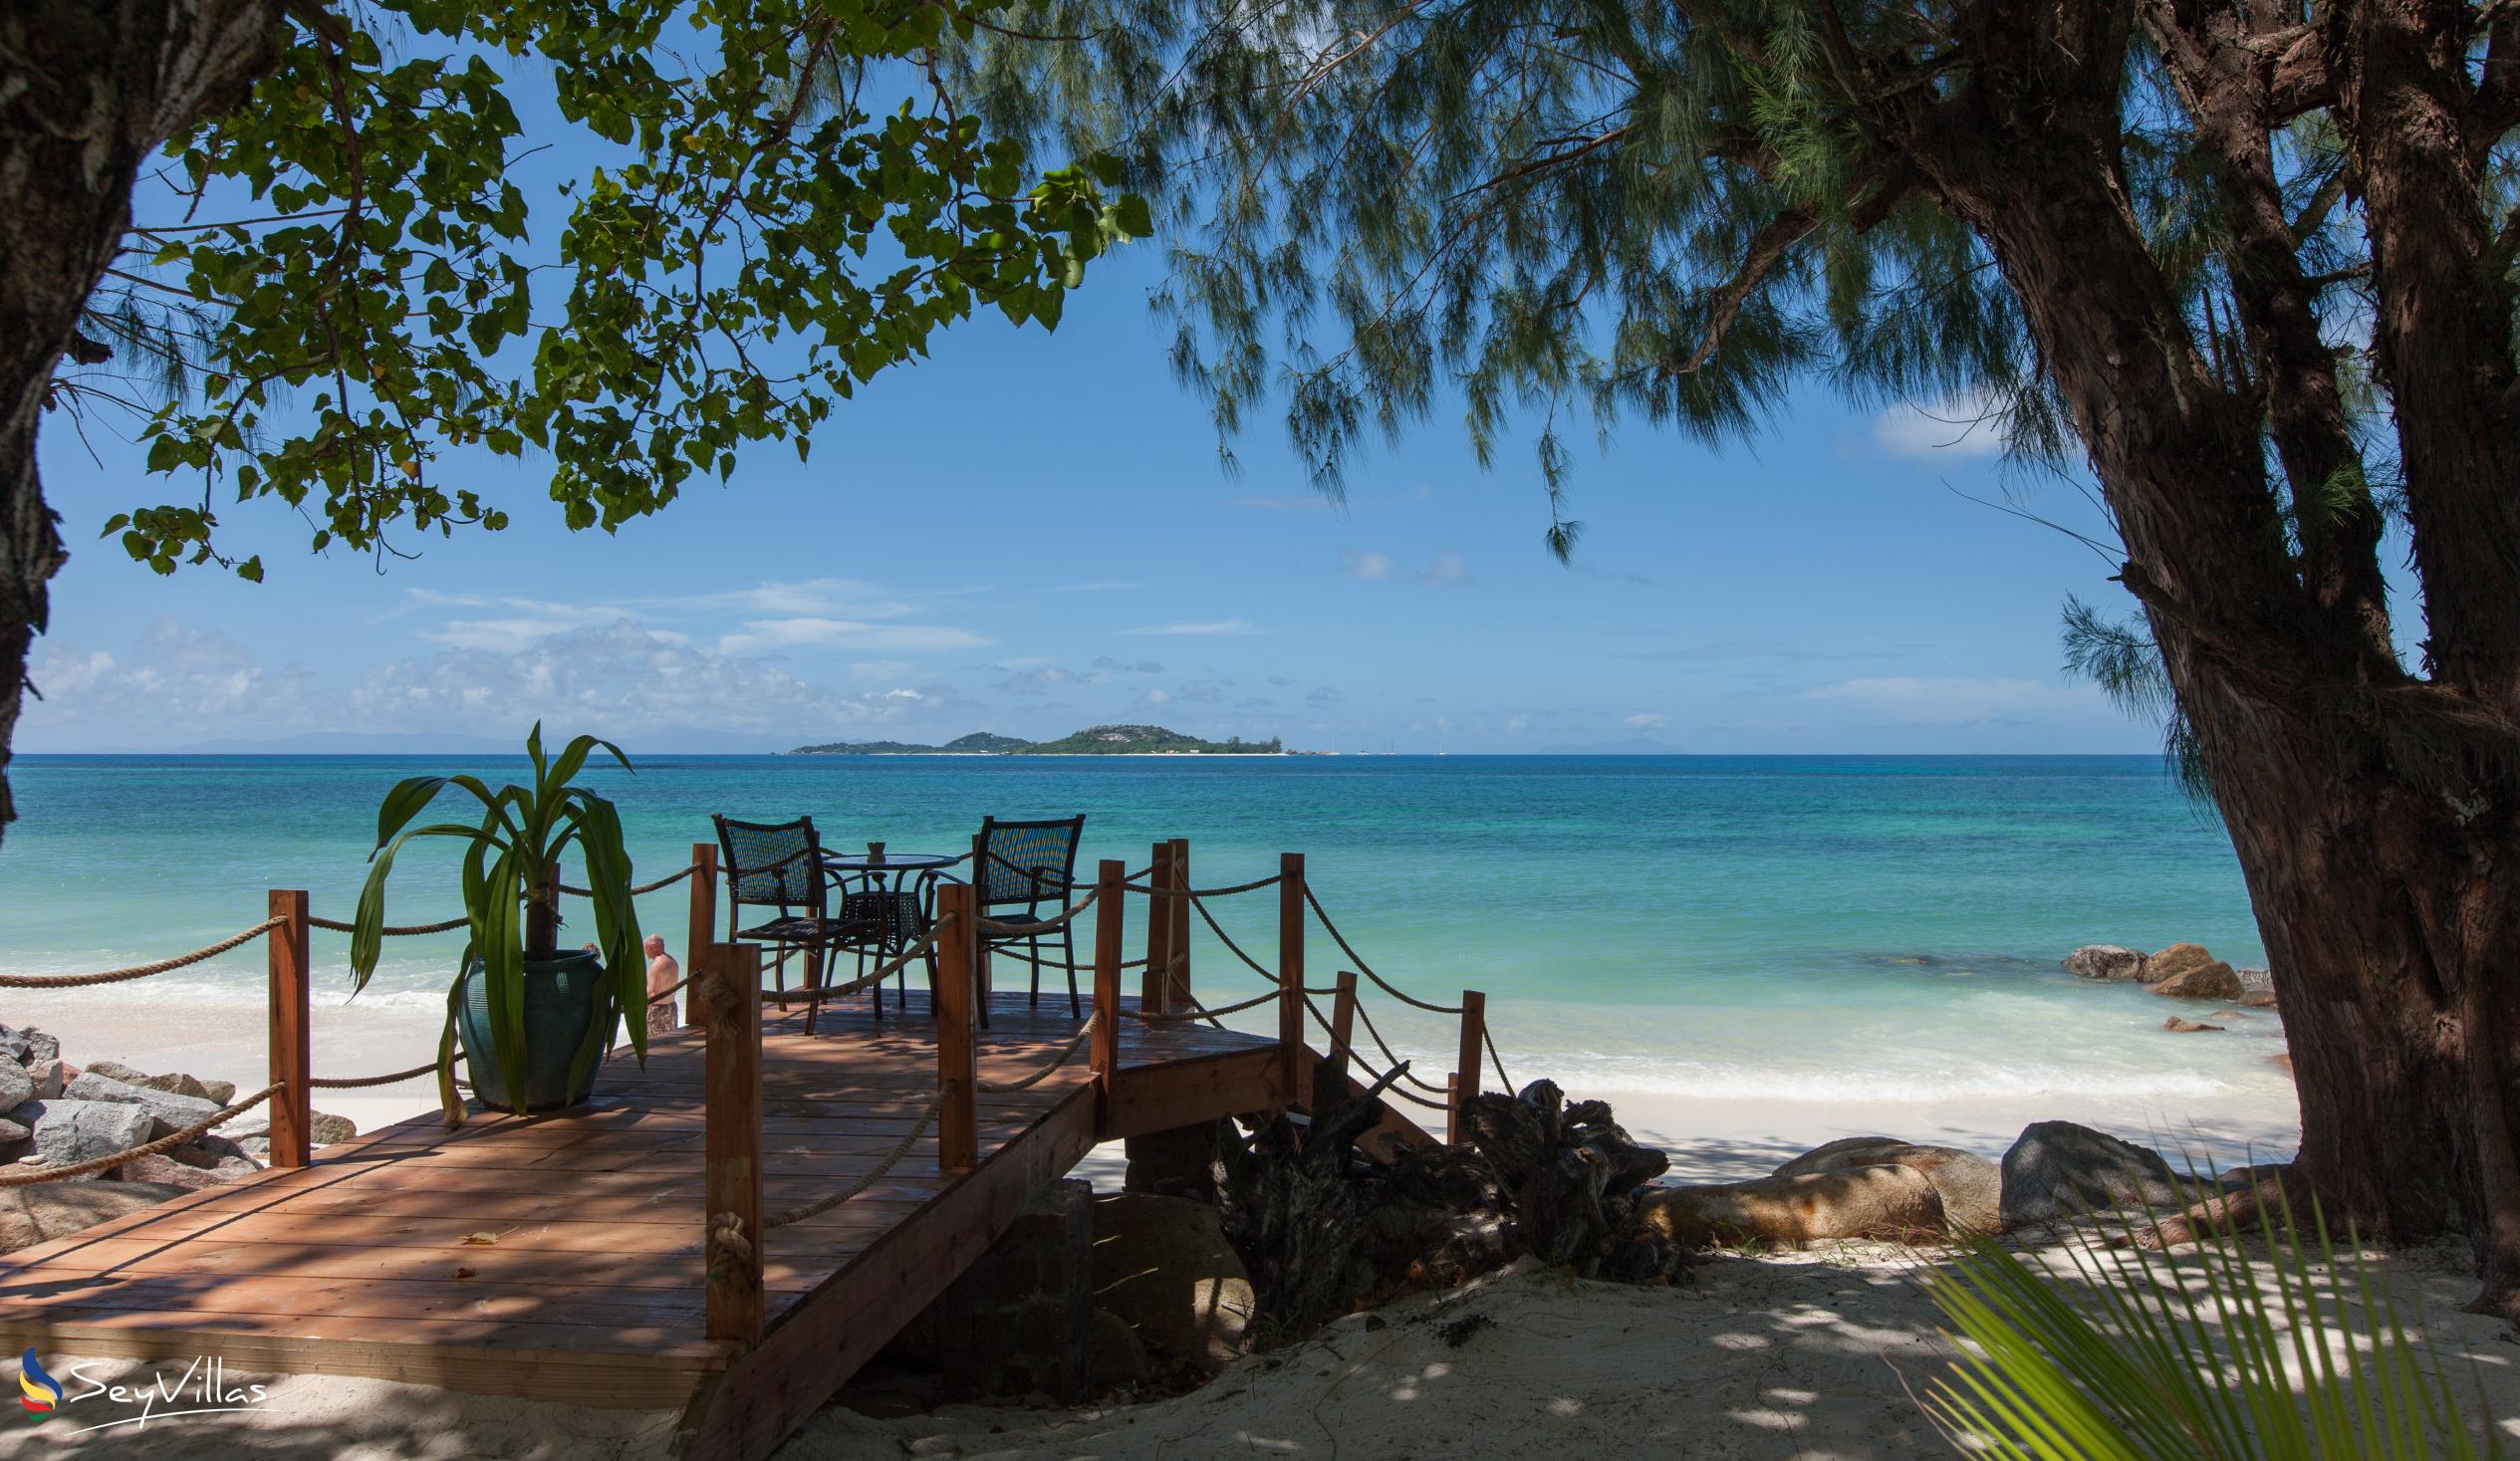 Photo 47: Castello Beach Hotel - Outdoor area - Praslin (Seychelles)